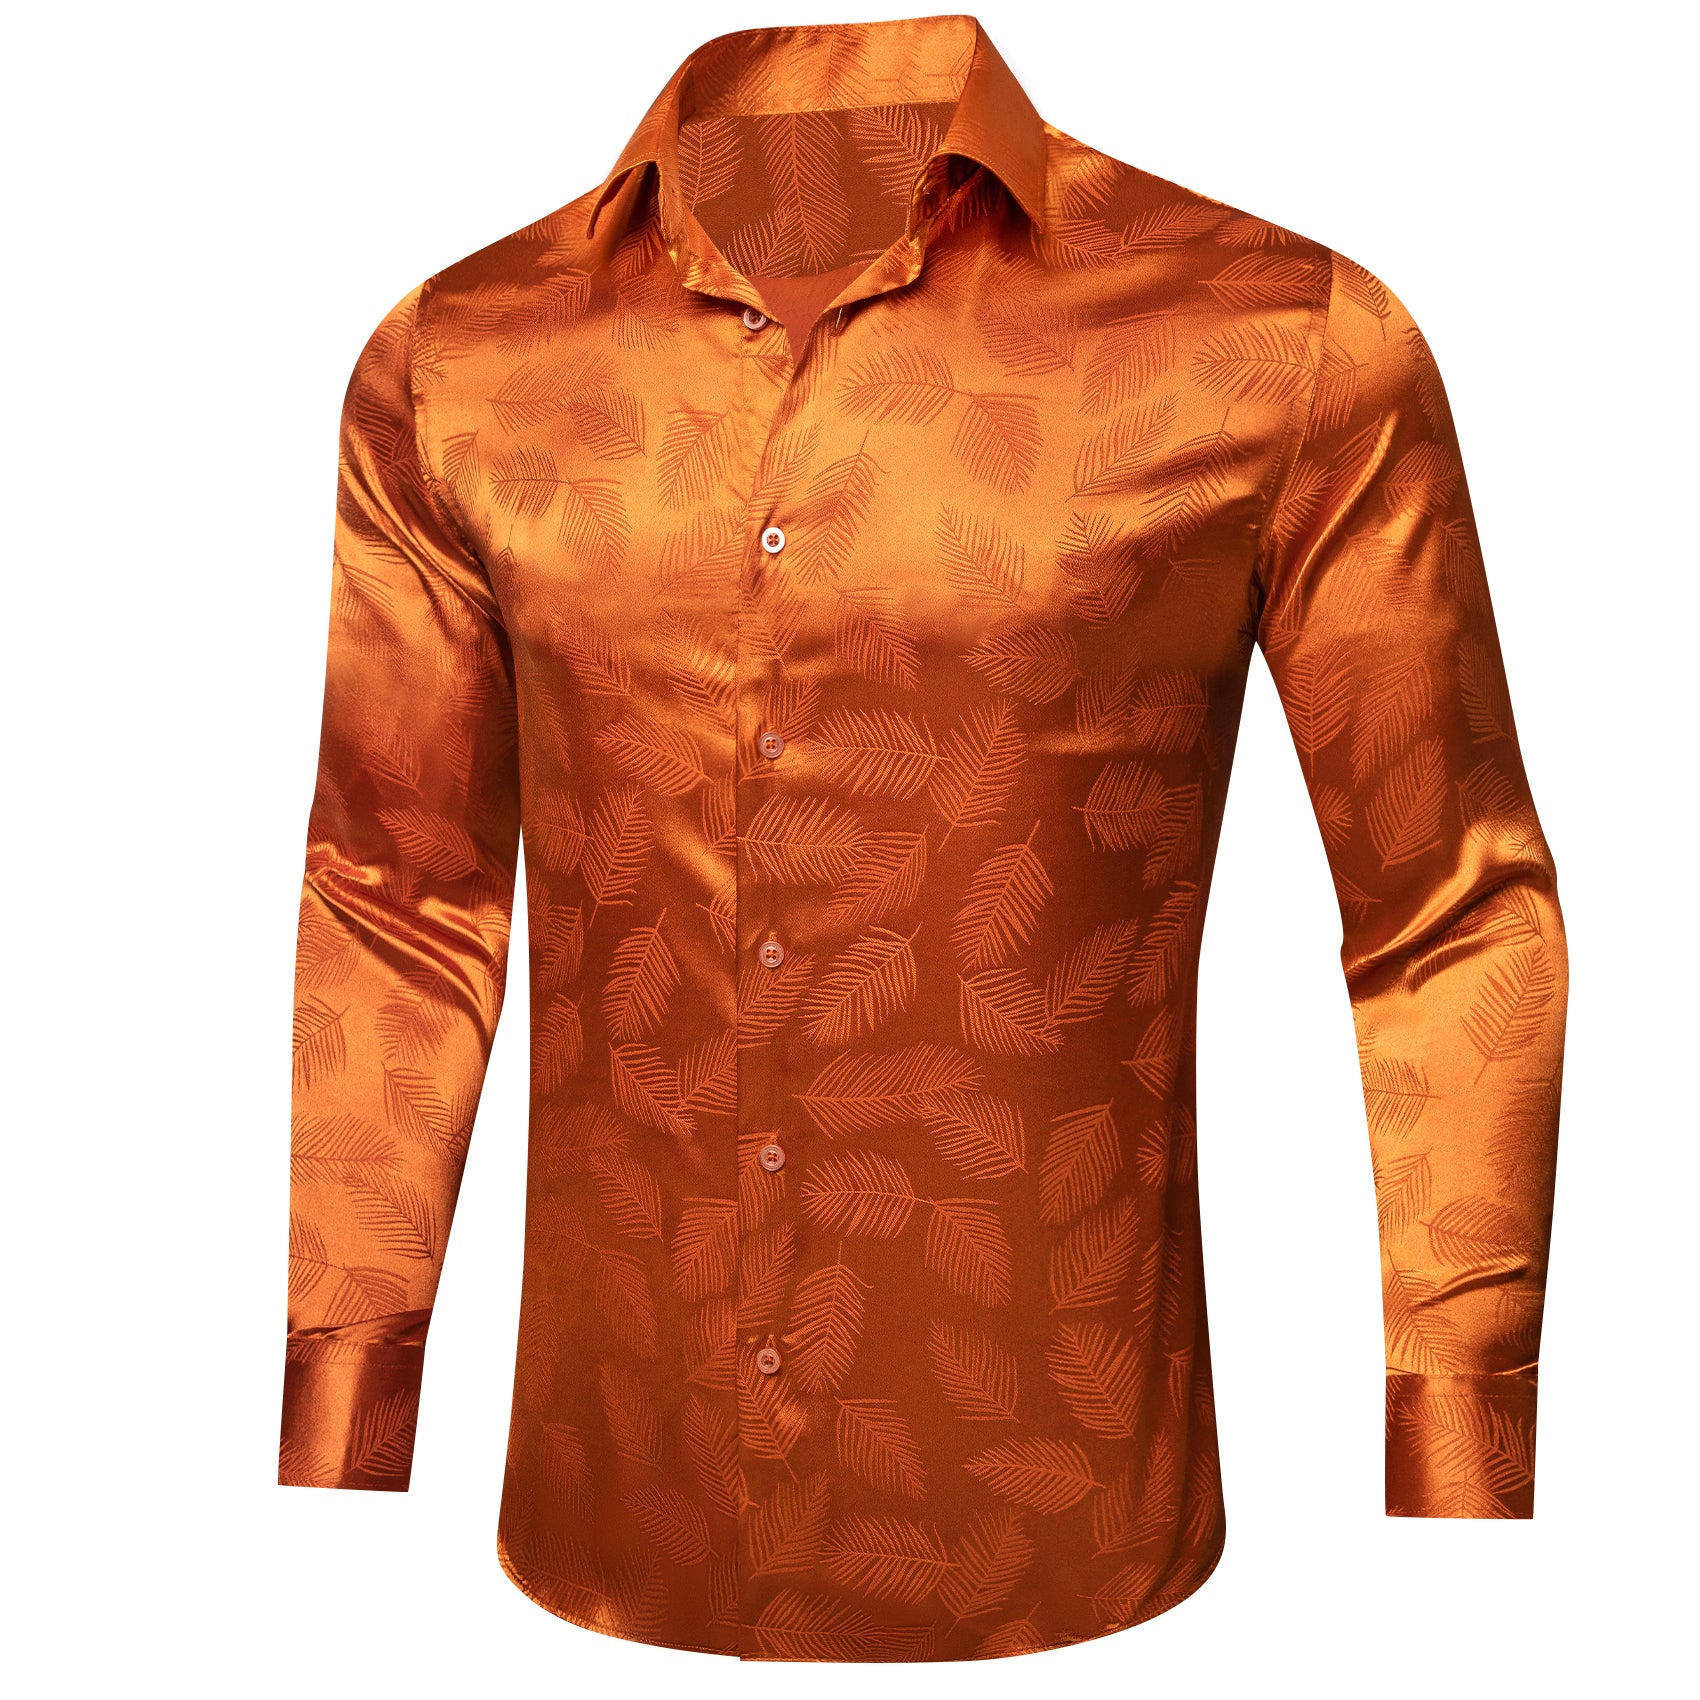 Barry.wang Orange Feather Silk Men's Shirt